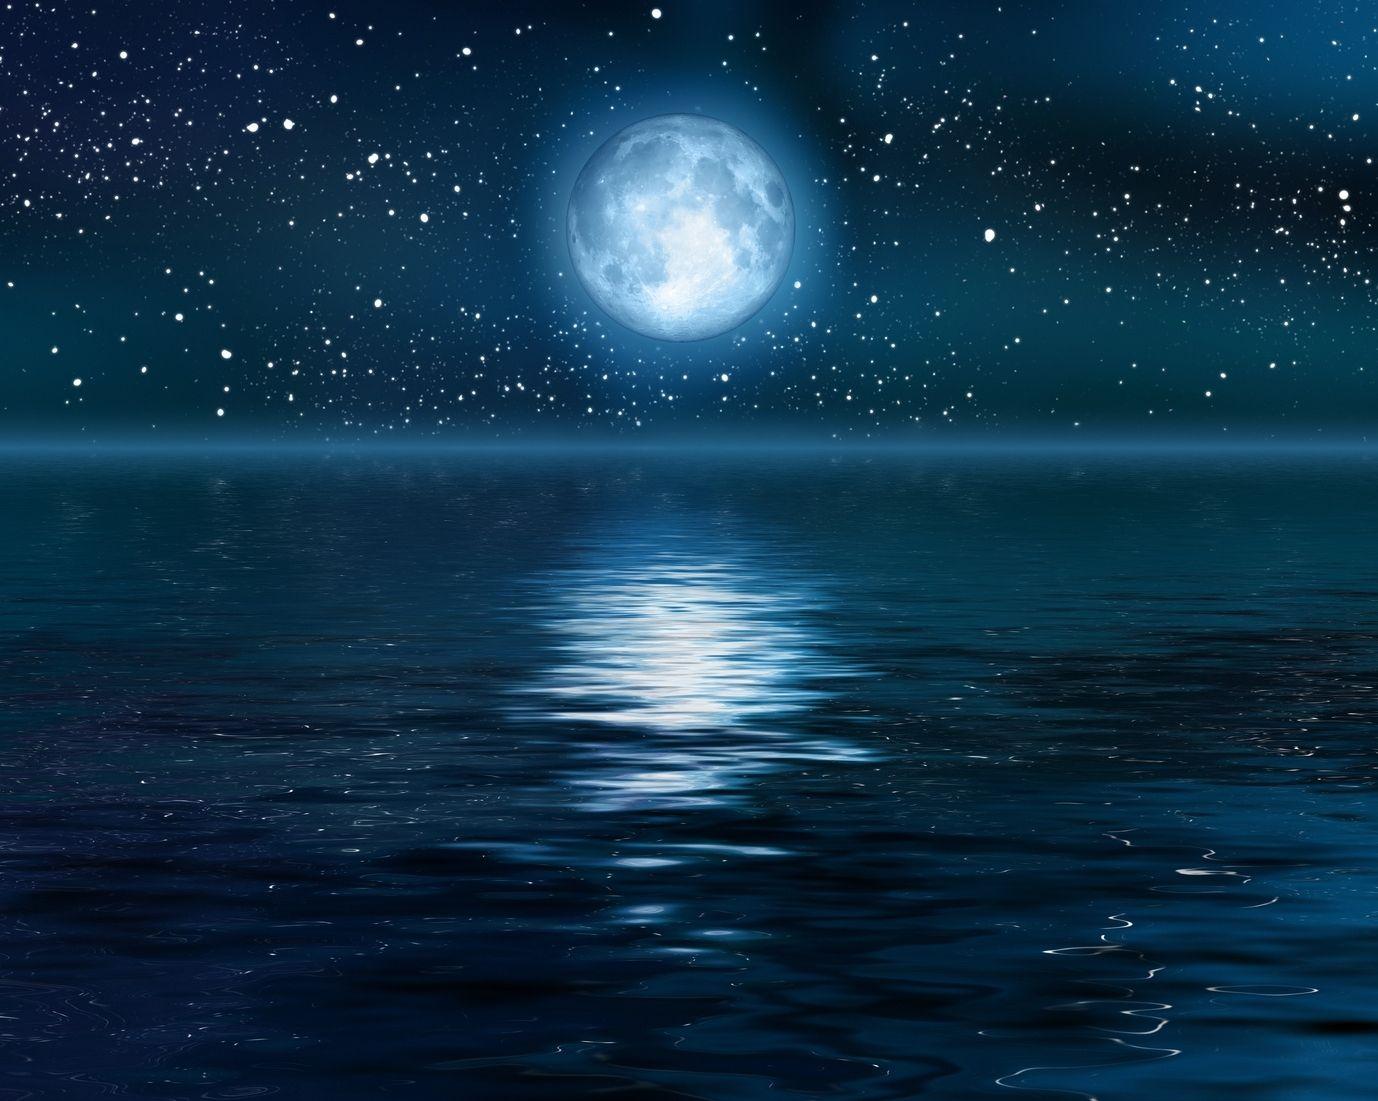 Download wallpaper 3840x2160 silhouettes moon night peak starry sky  full moon hd background